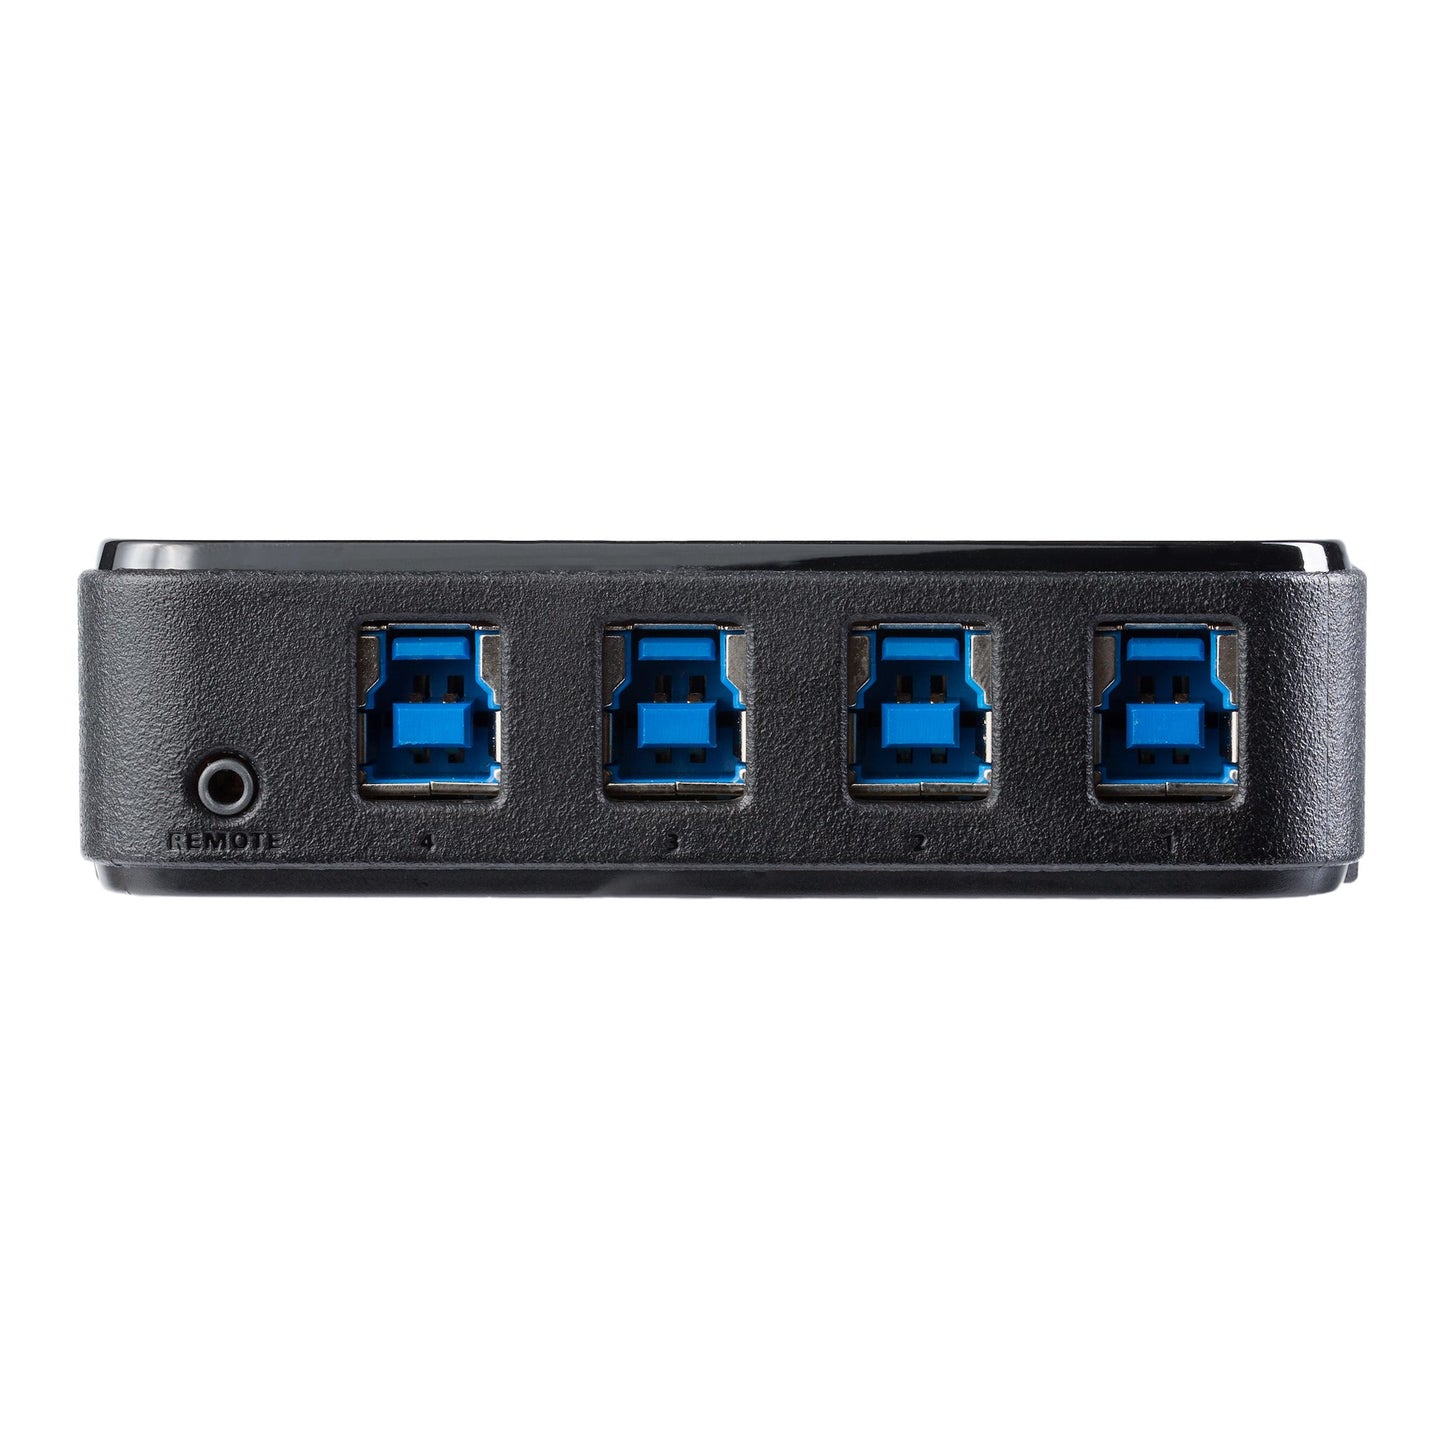 Switch Conmutador USB 3.0 STARTECH  4x4 para Compartir Dispositivos Periféricos - 5Gbps - 8 puertos USB, color negro